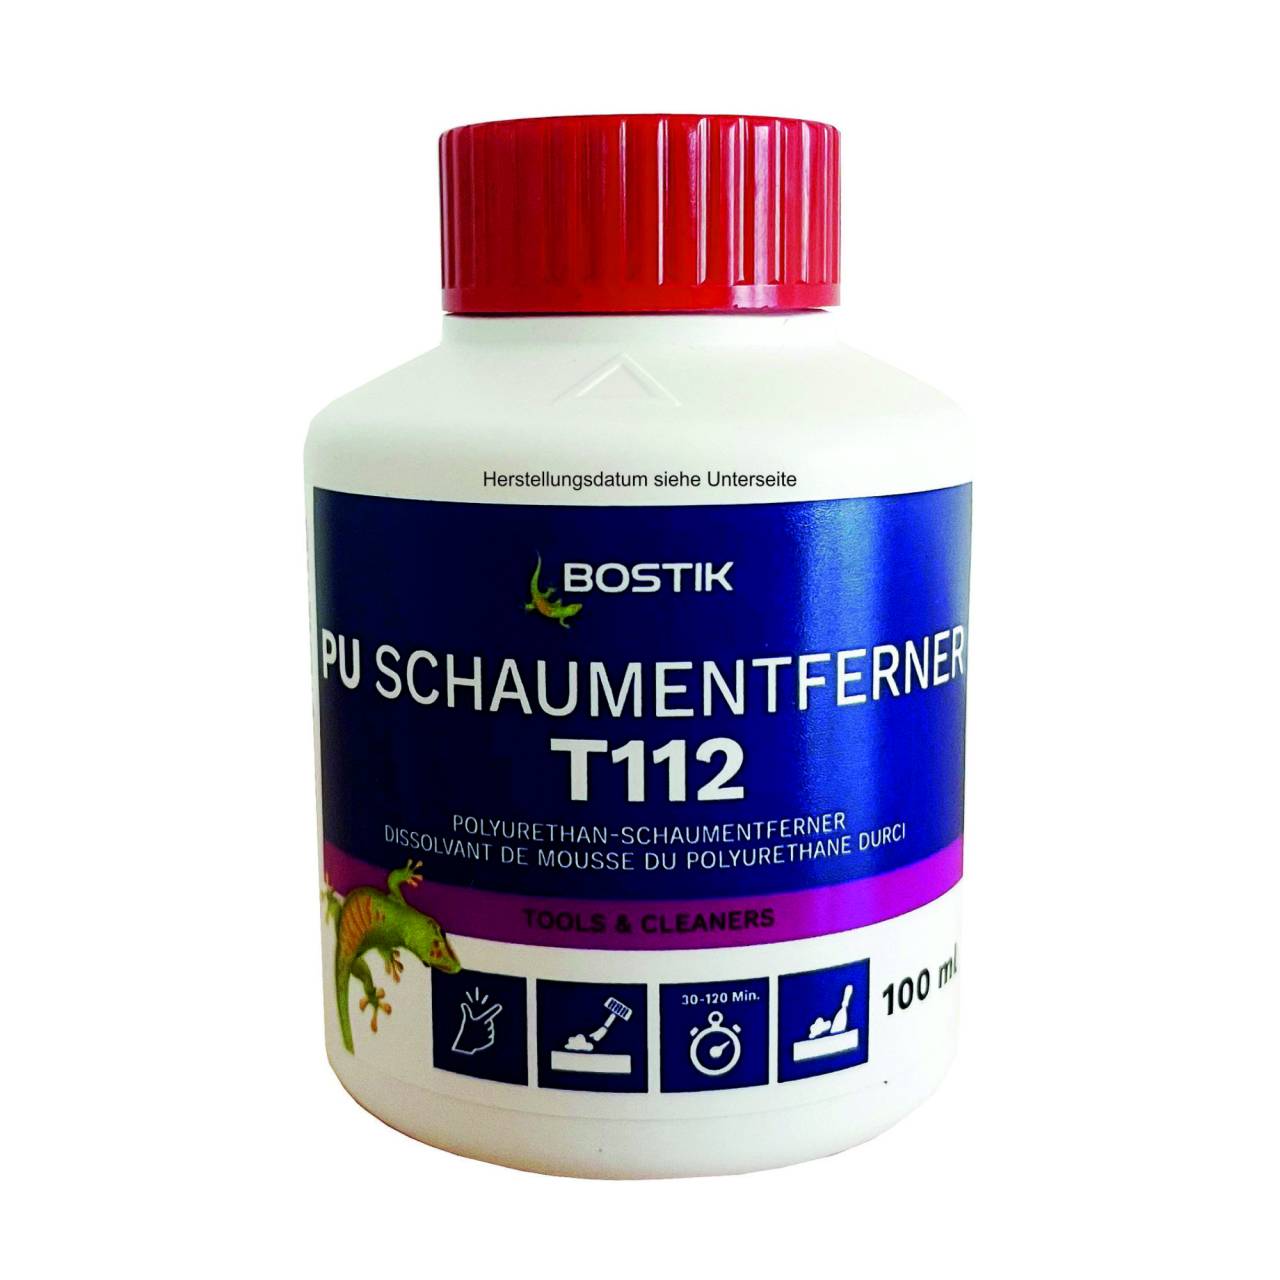 PU-Schaum Entferner T112 'Bostik®' / 100 ml Flasche